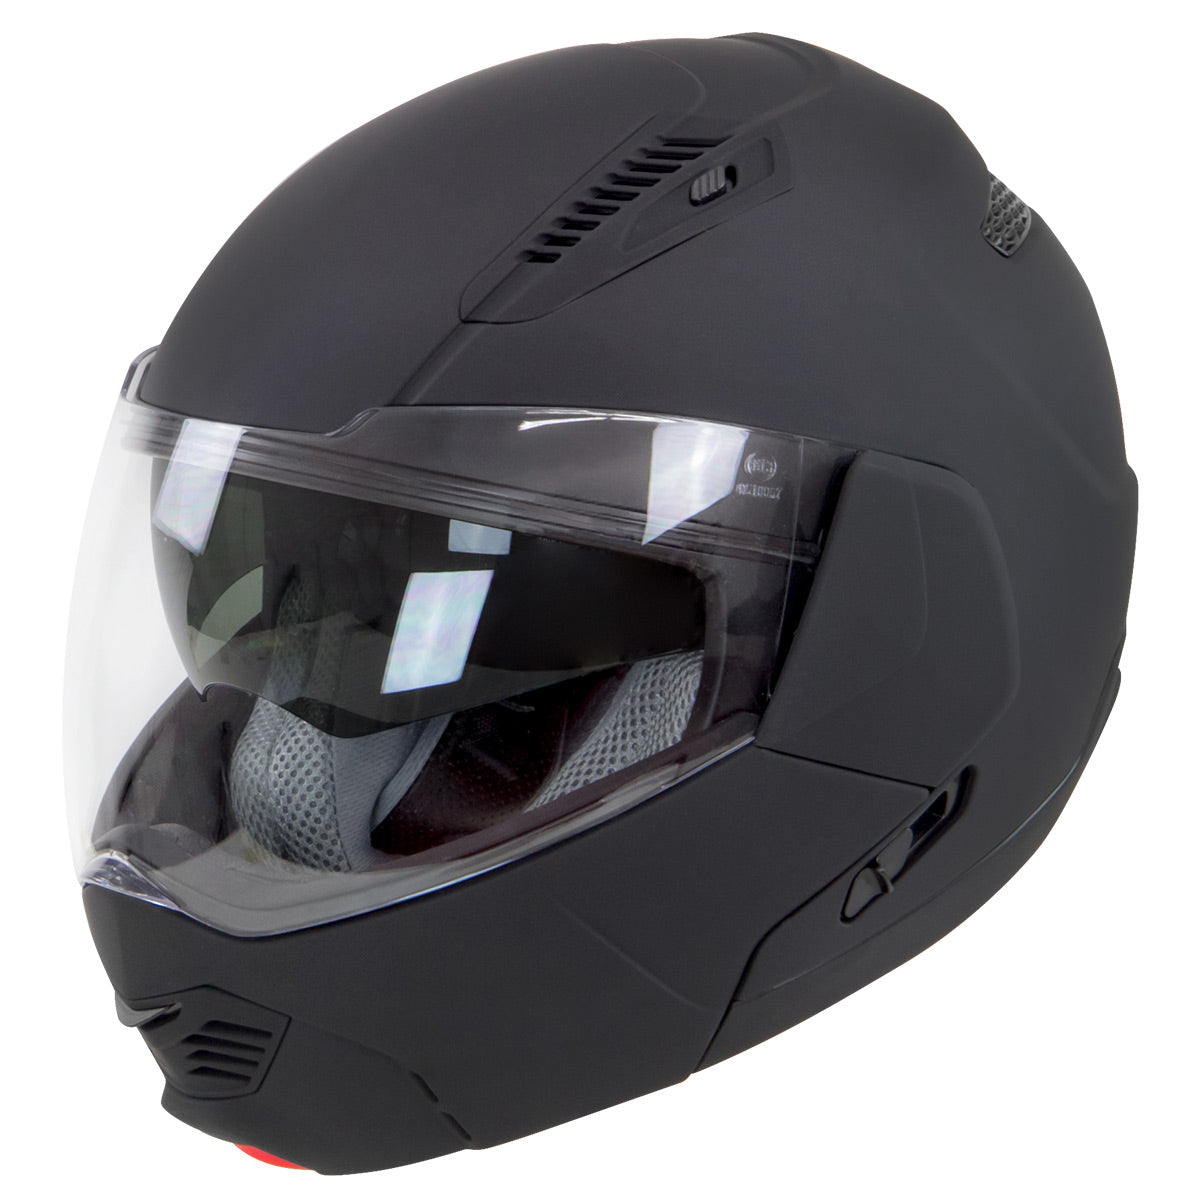 Hawk ST 1197 'InFlux' Matte Black 2 in 1 Modular Motorcycle Helmet